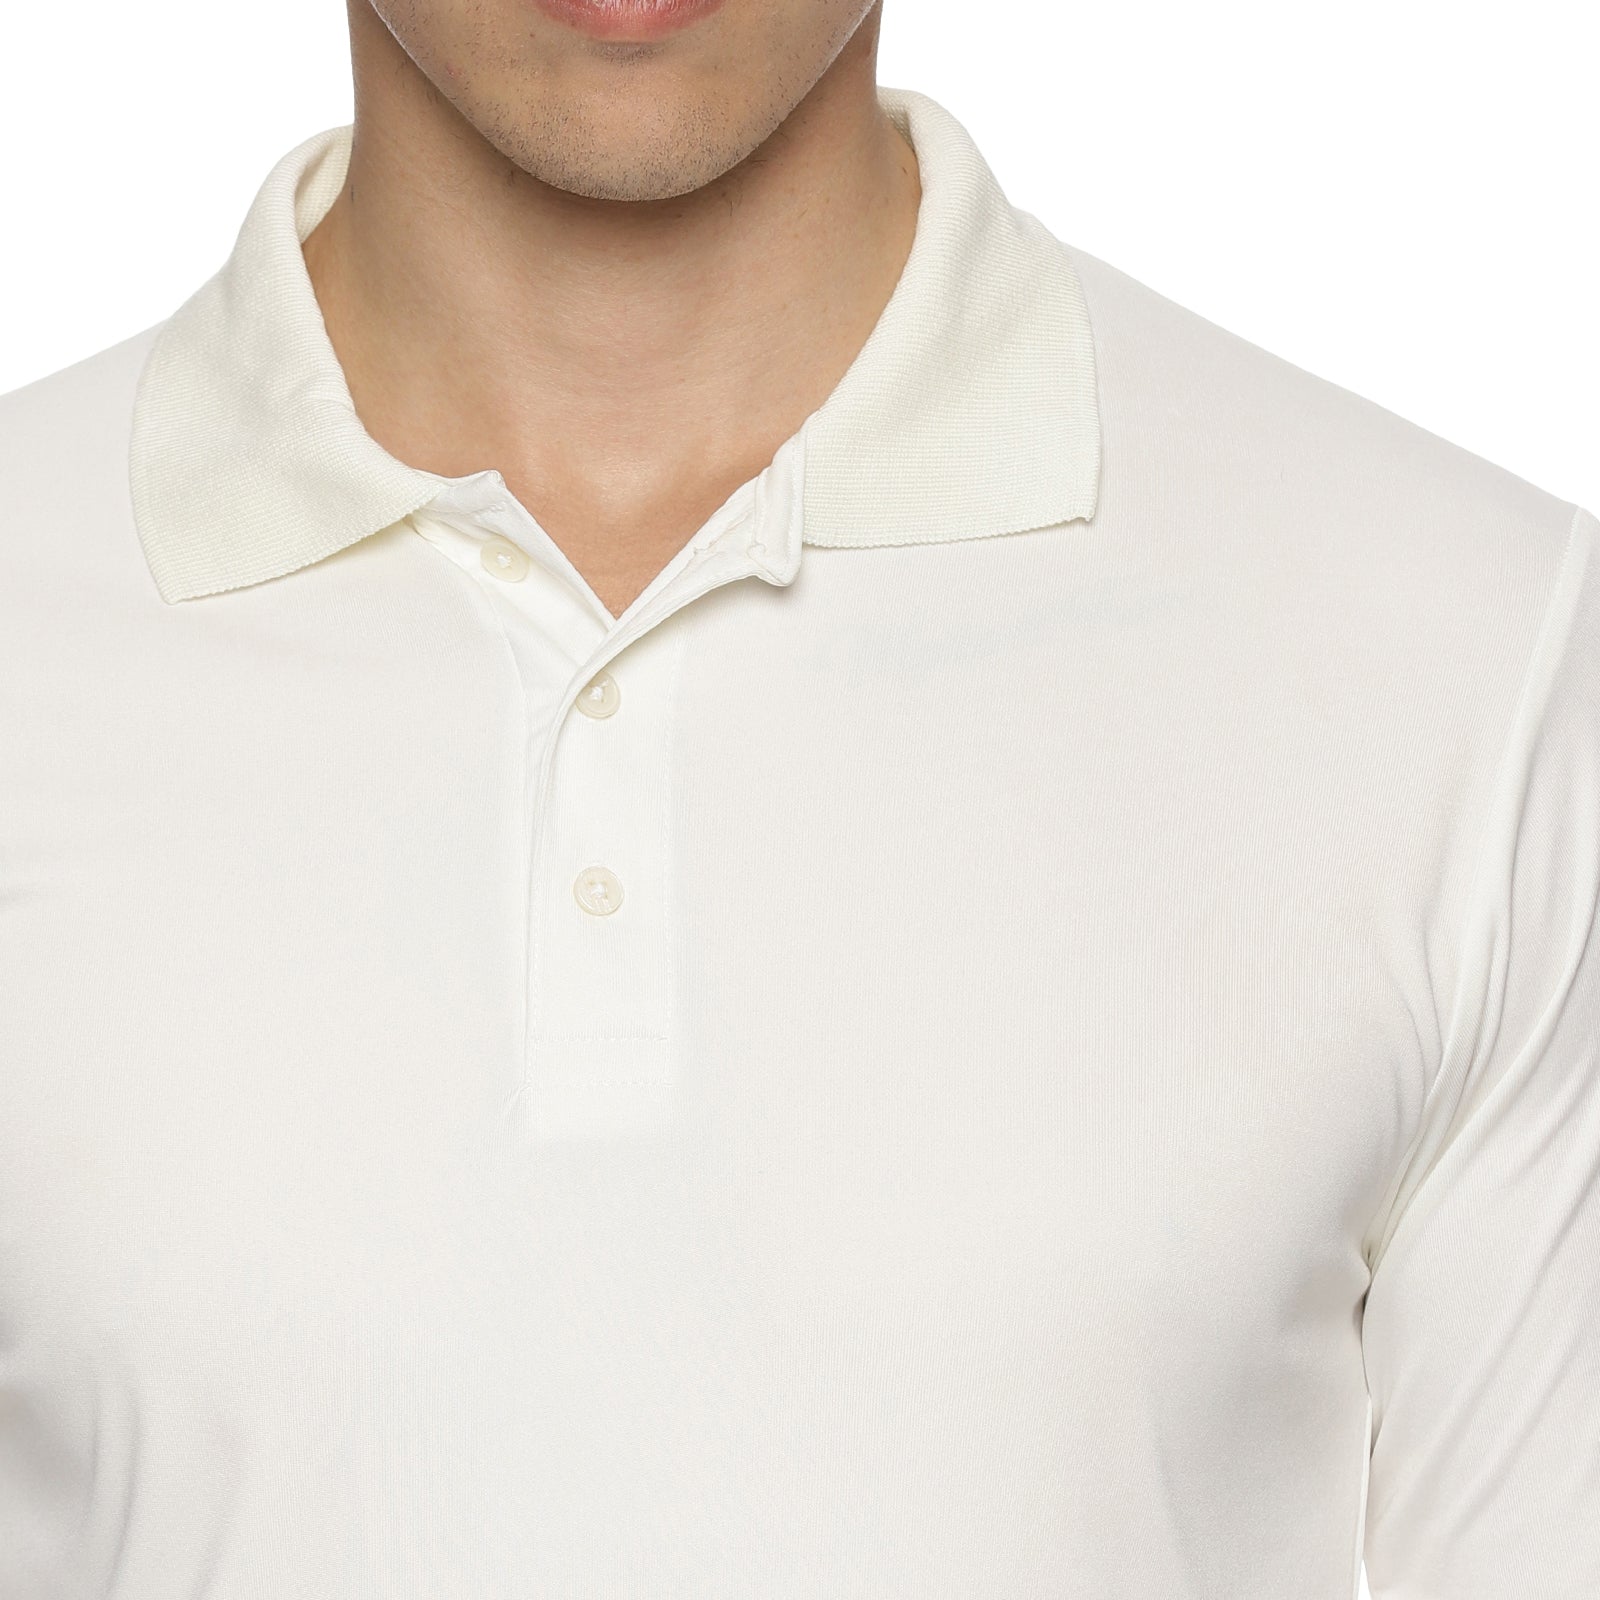 Prokick Ignite Full Sleeves Cricket T-Shirt, Off White - Best Price online Prokicksports.com